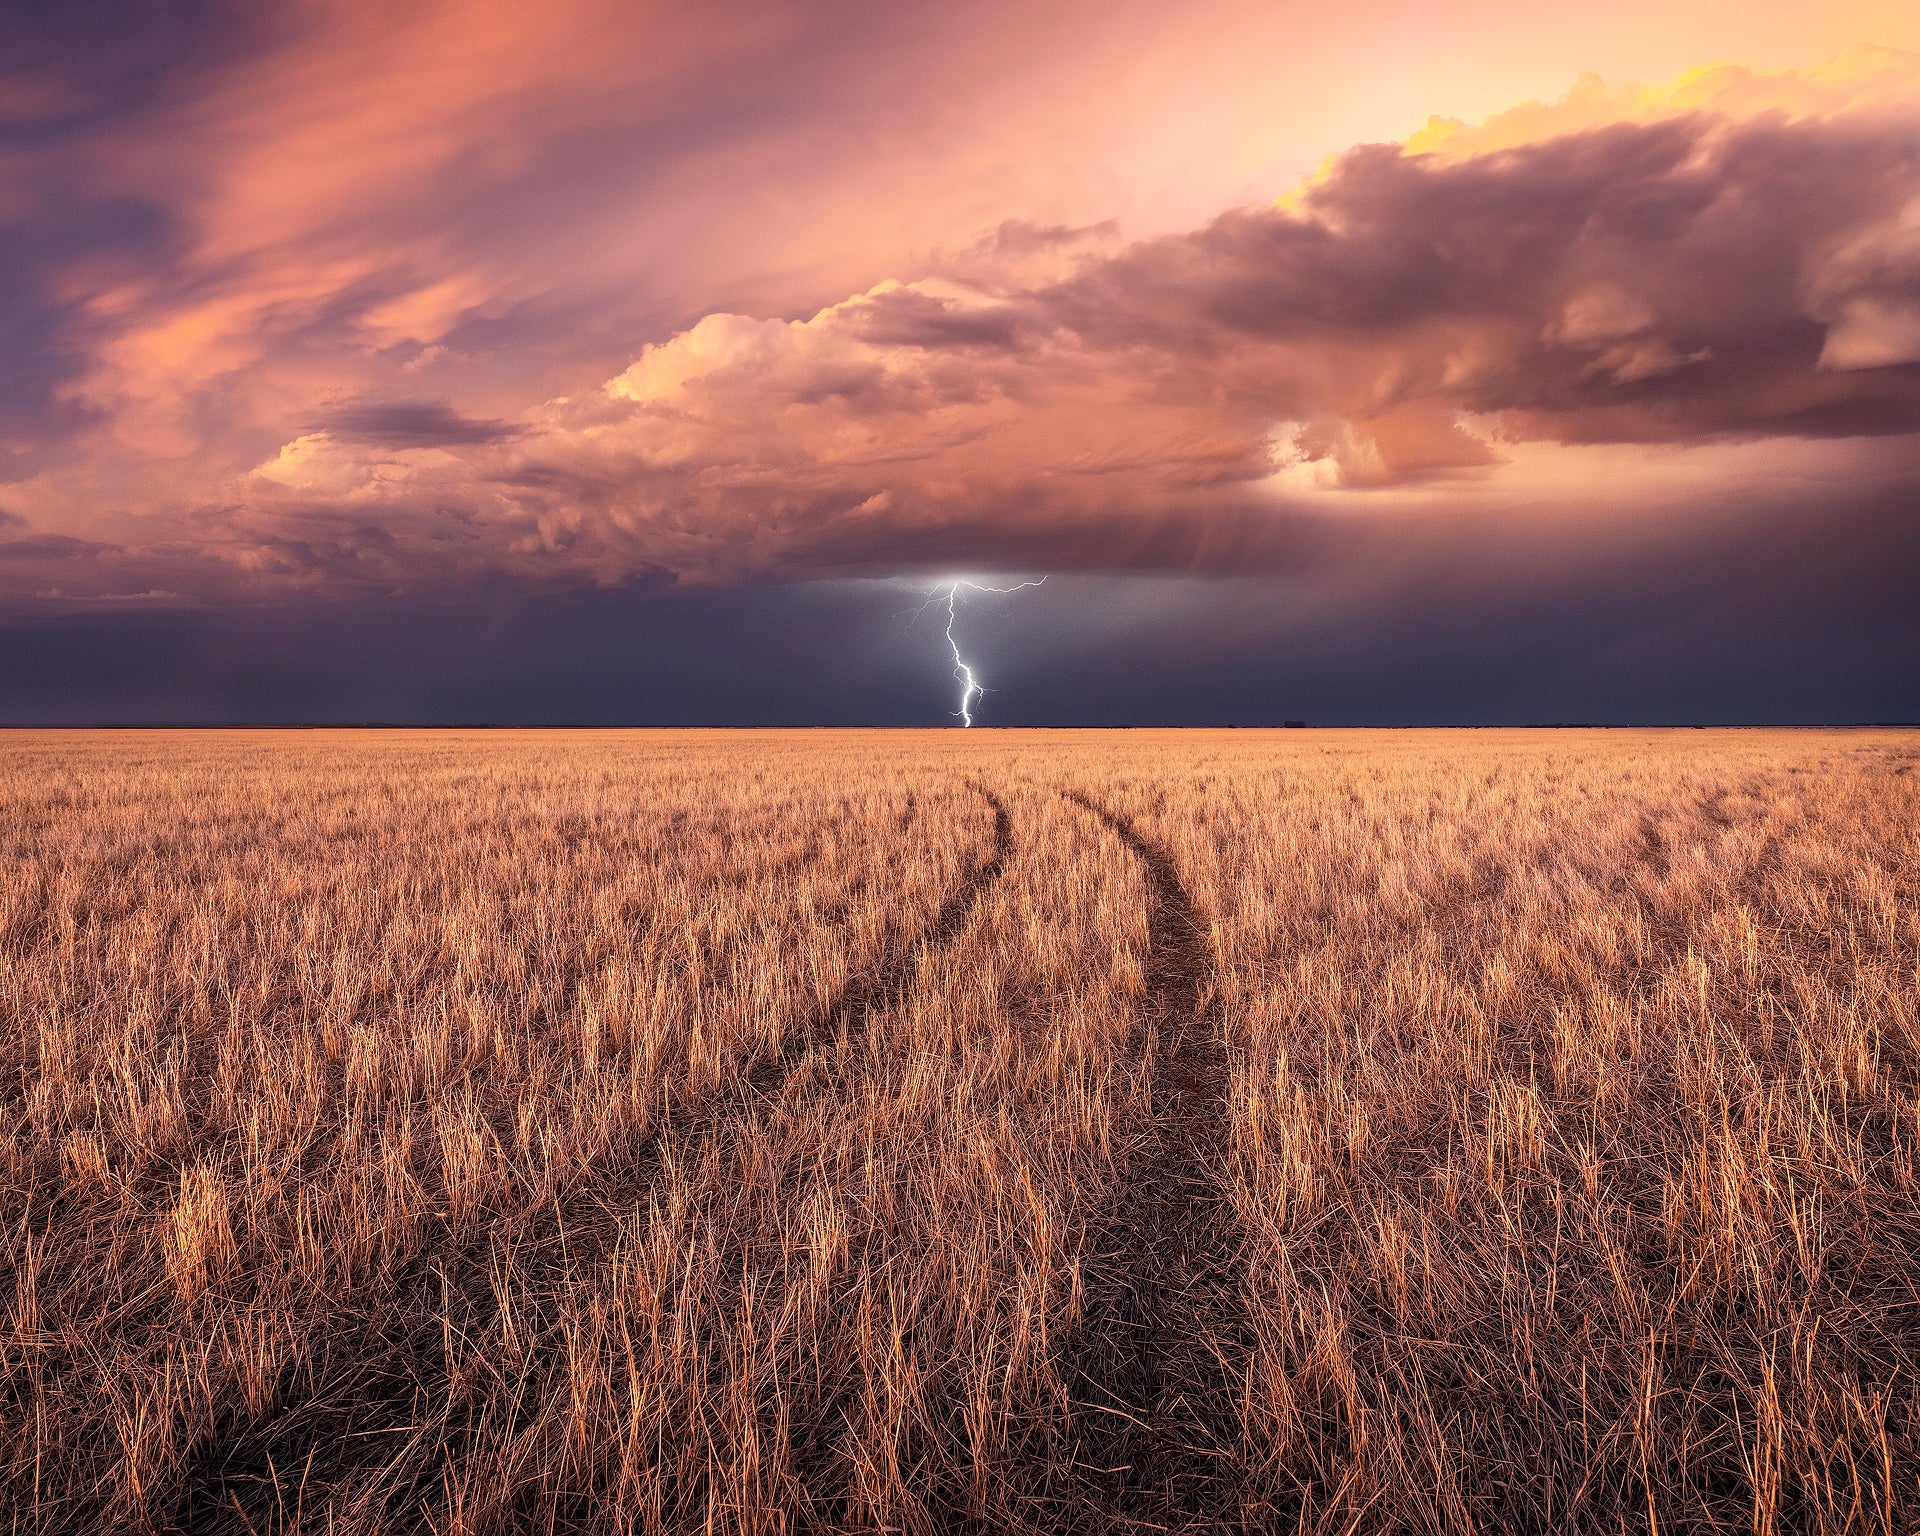 Lightning strike over a field in South Australia